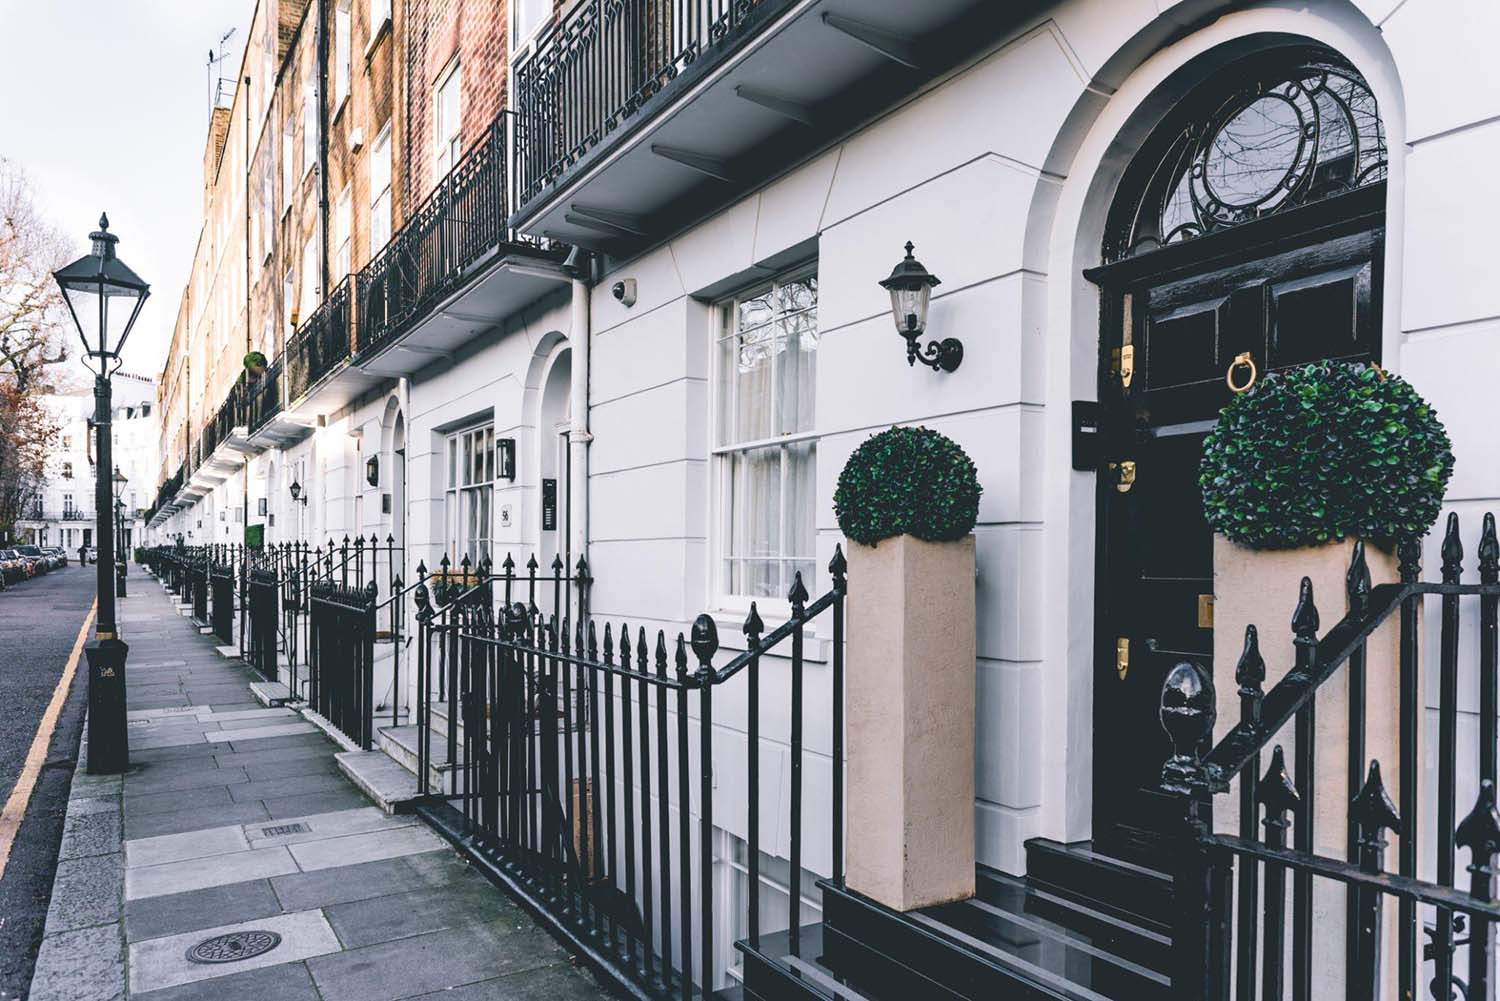 London Serviced Apartments: Panduan Lengkap untuk Menemukan Akomodasi Jangka Pendek Terbaik di London